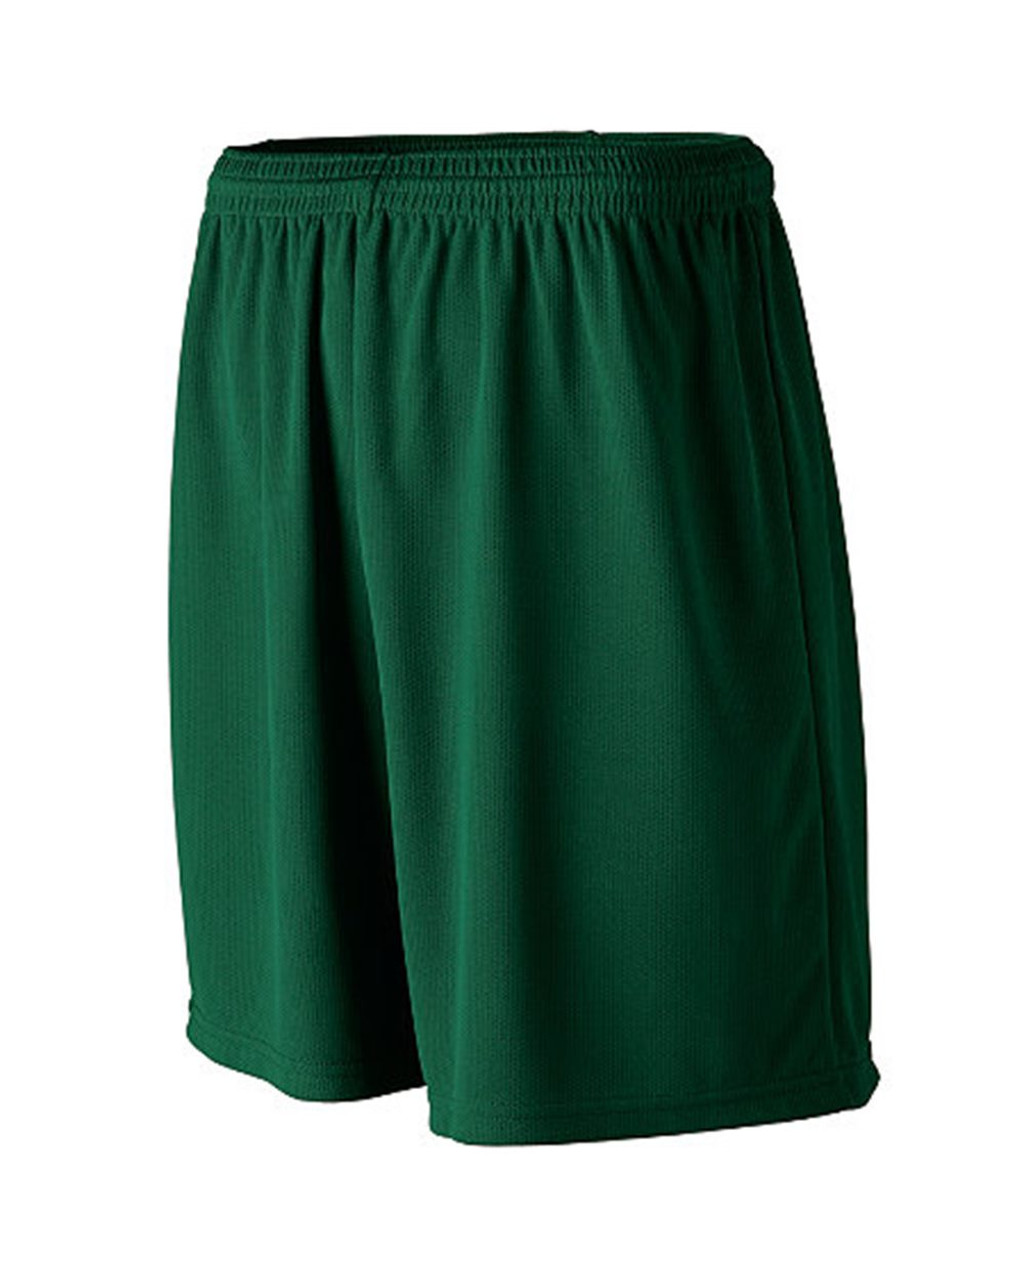 Custom Wicking Mesh Athletic Shorts - 805